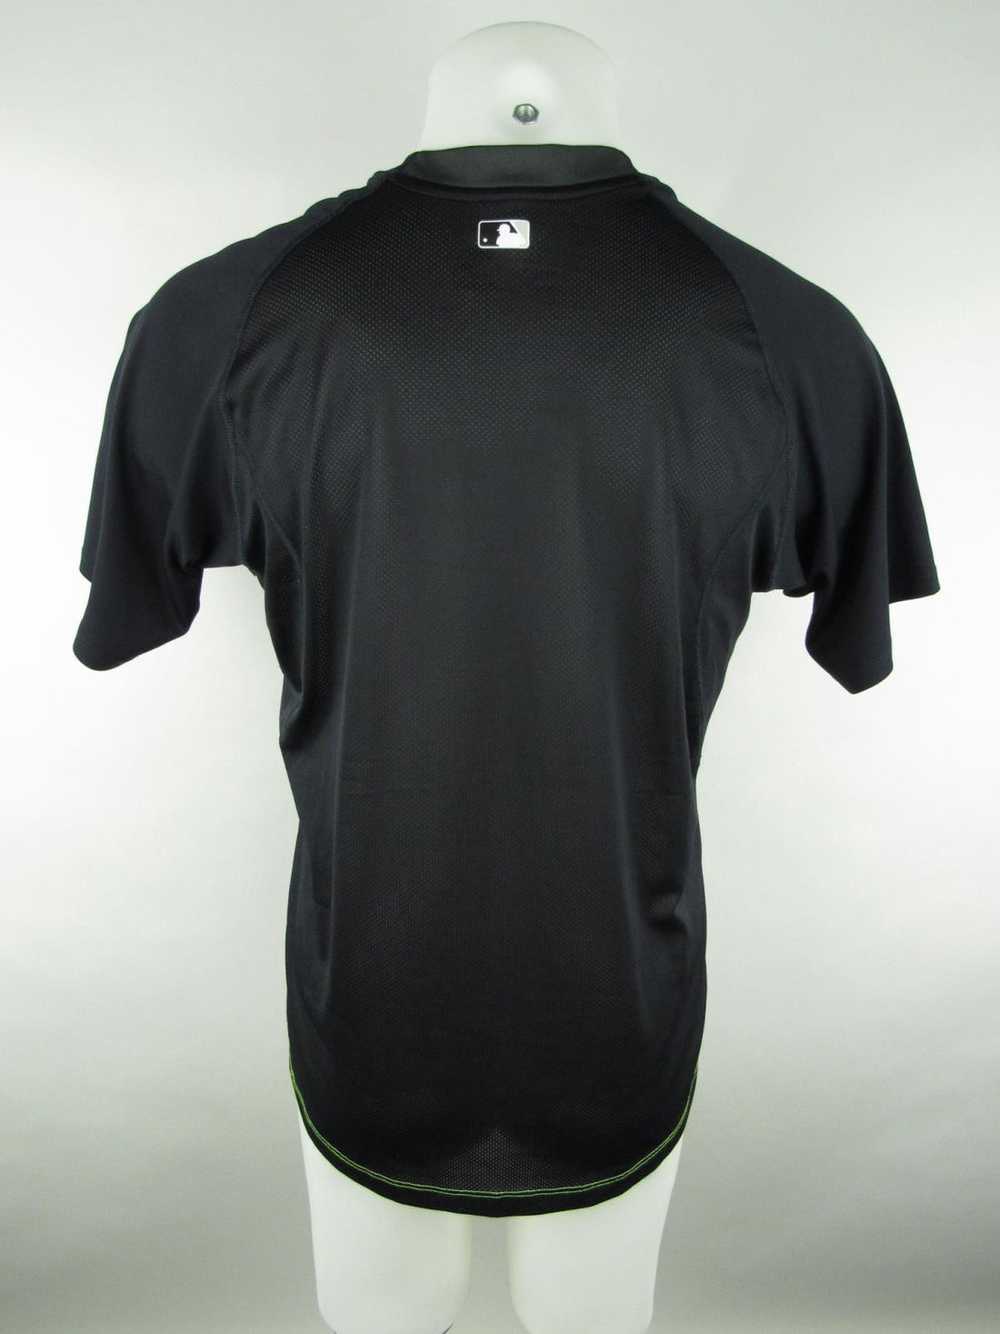 Kobe Short Sleeve Compression Shirt - ADULT 